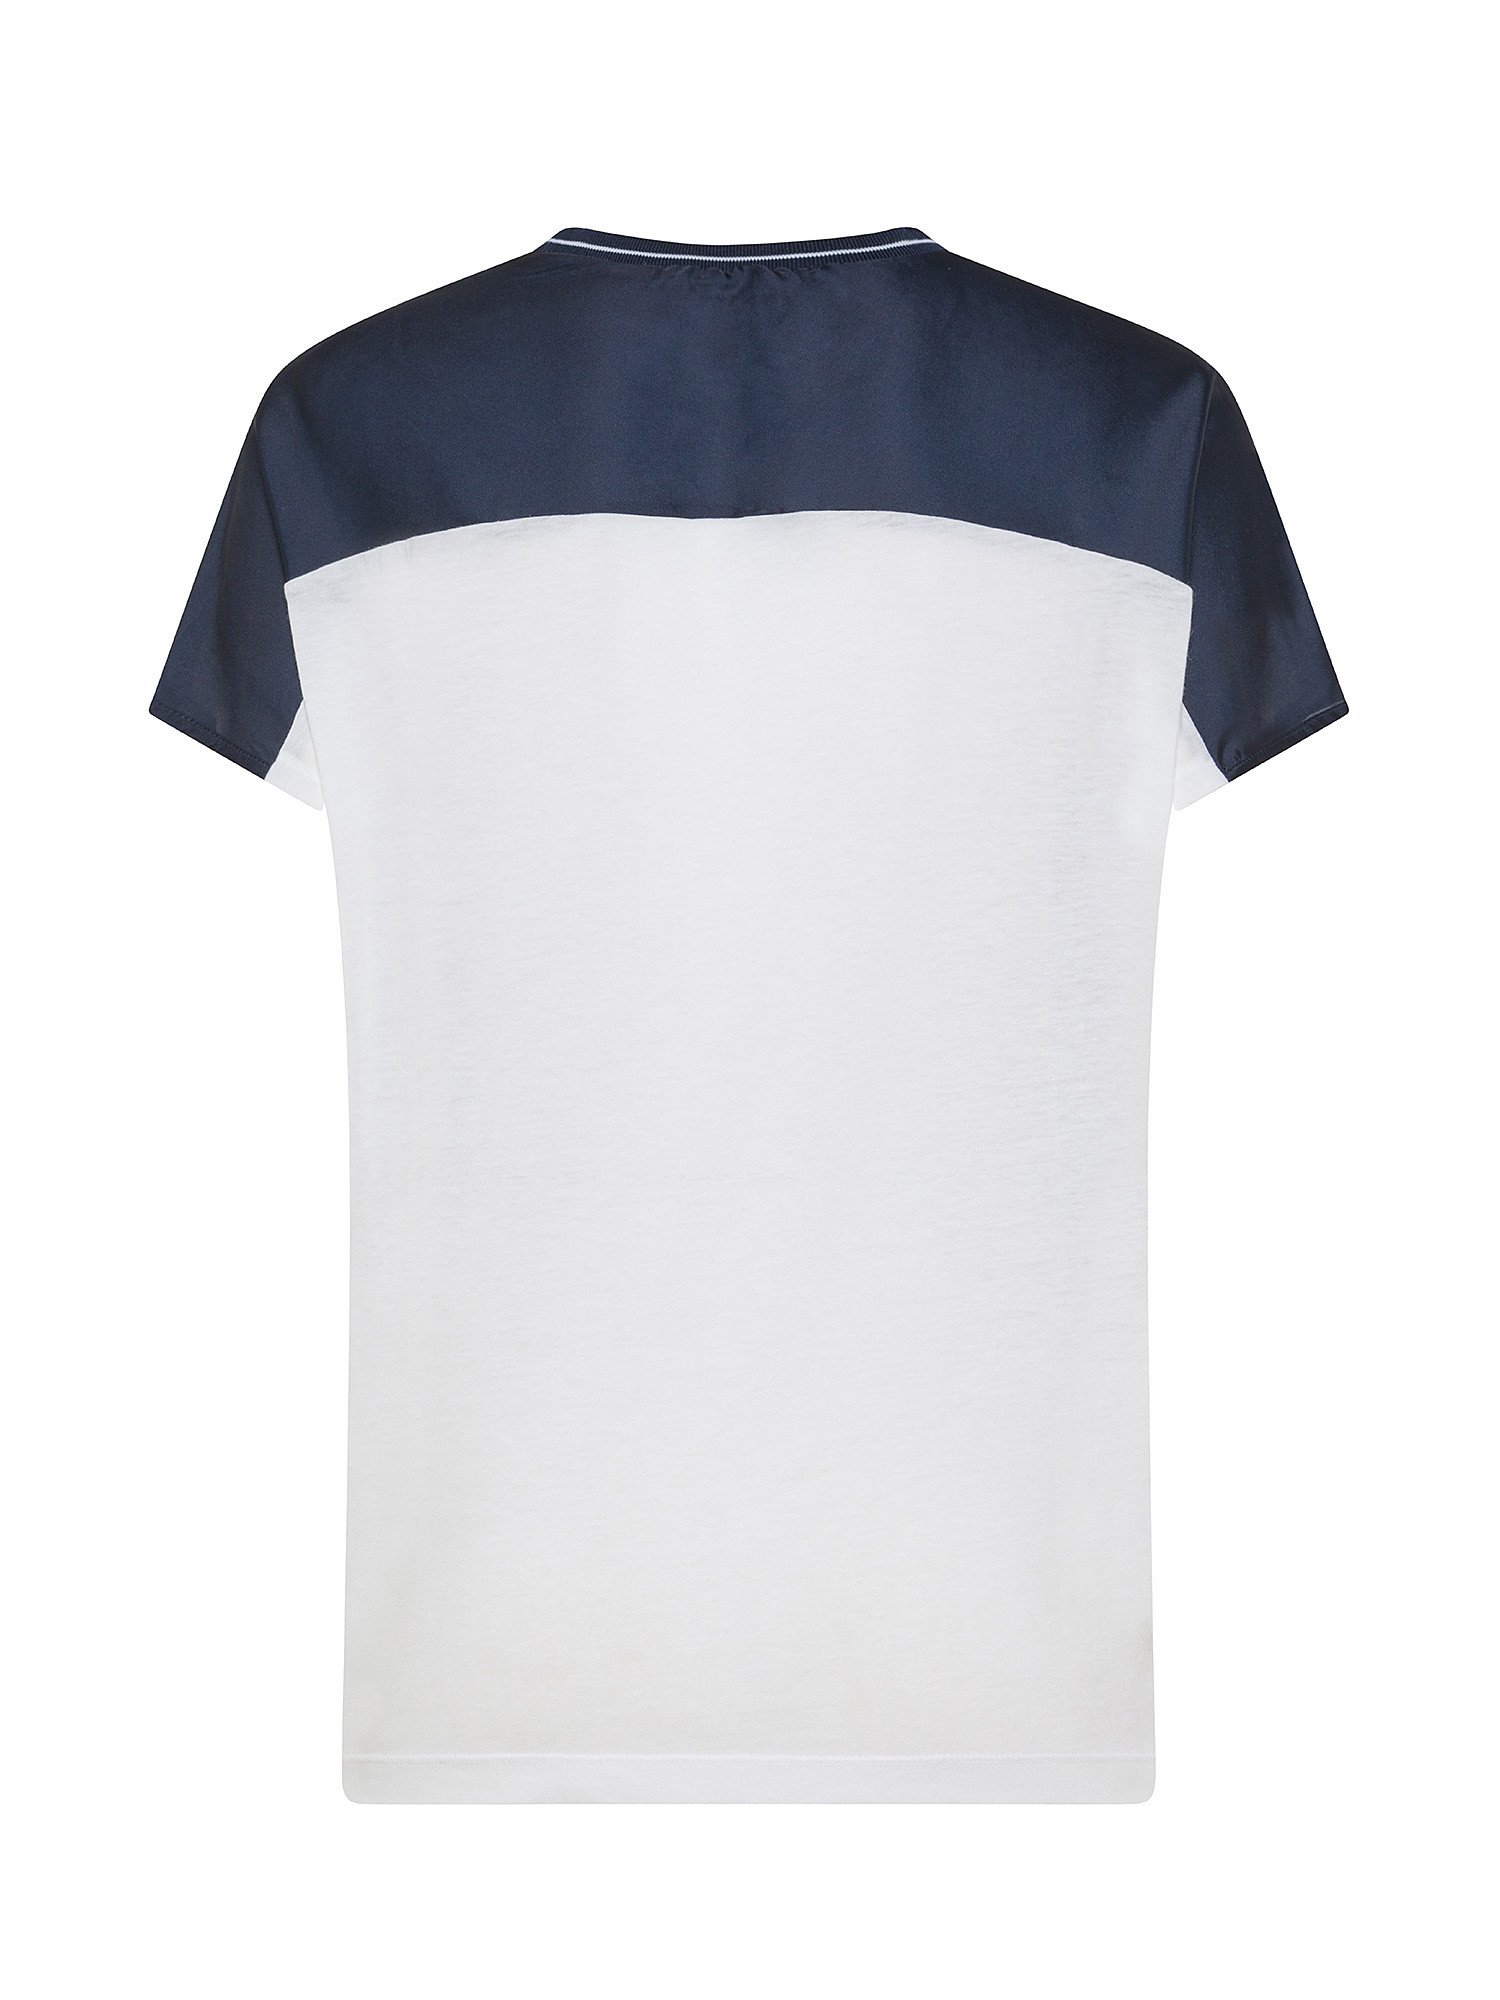 Emporio Armani - T-shirt con maxi stampa, Blu scuro, large image number 1